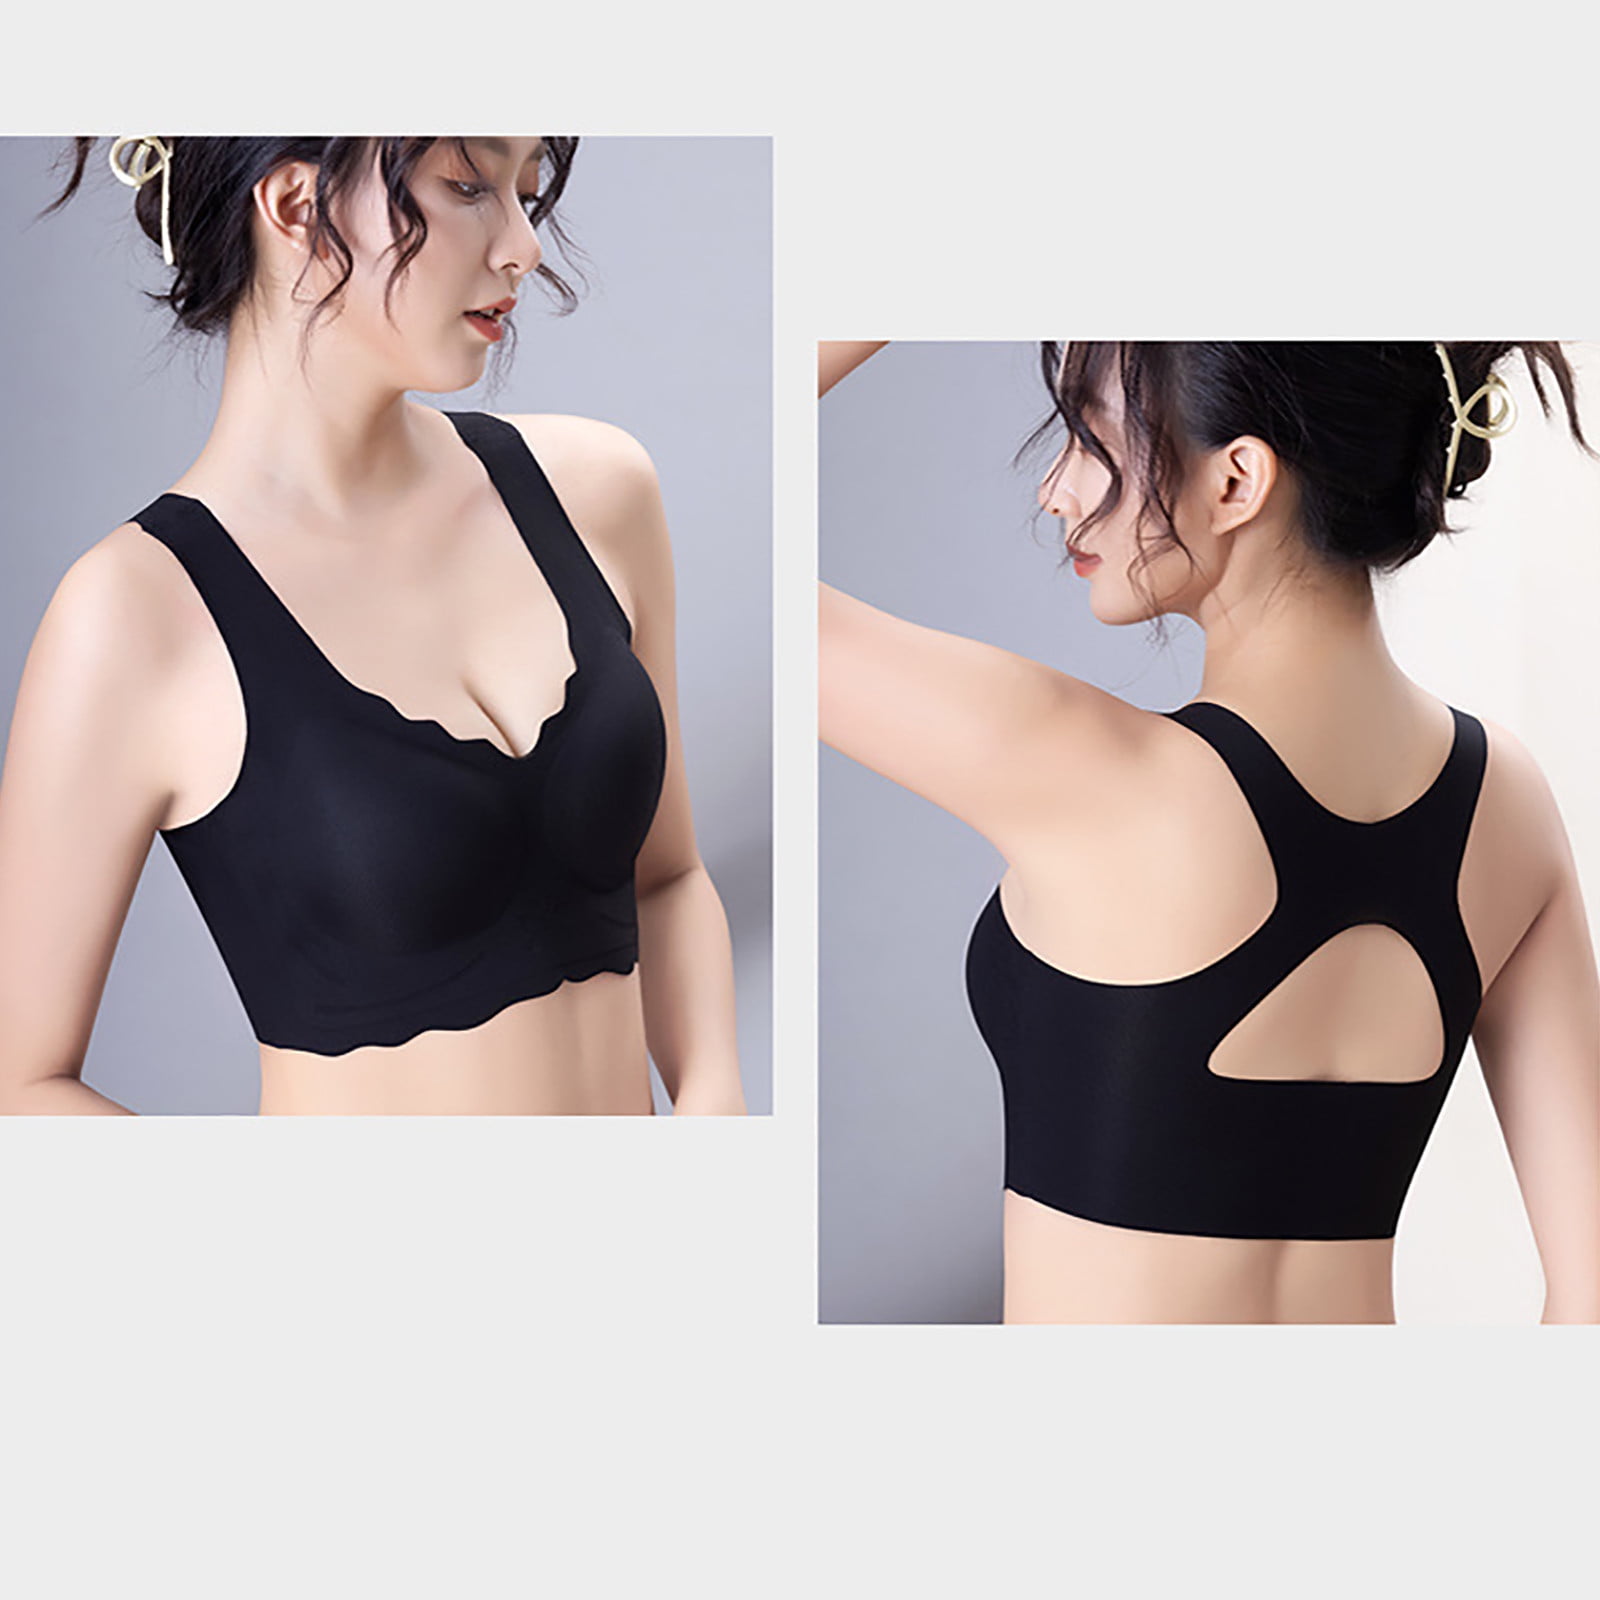 Lopecy-Sta Women's Bra Underwear Removable Shoulder Strap Daily